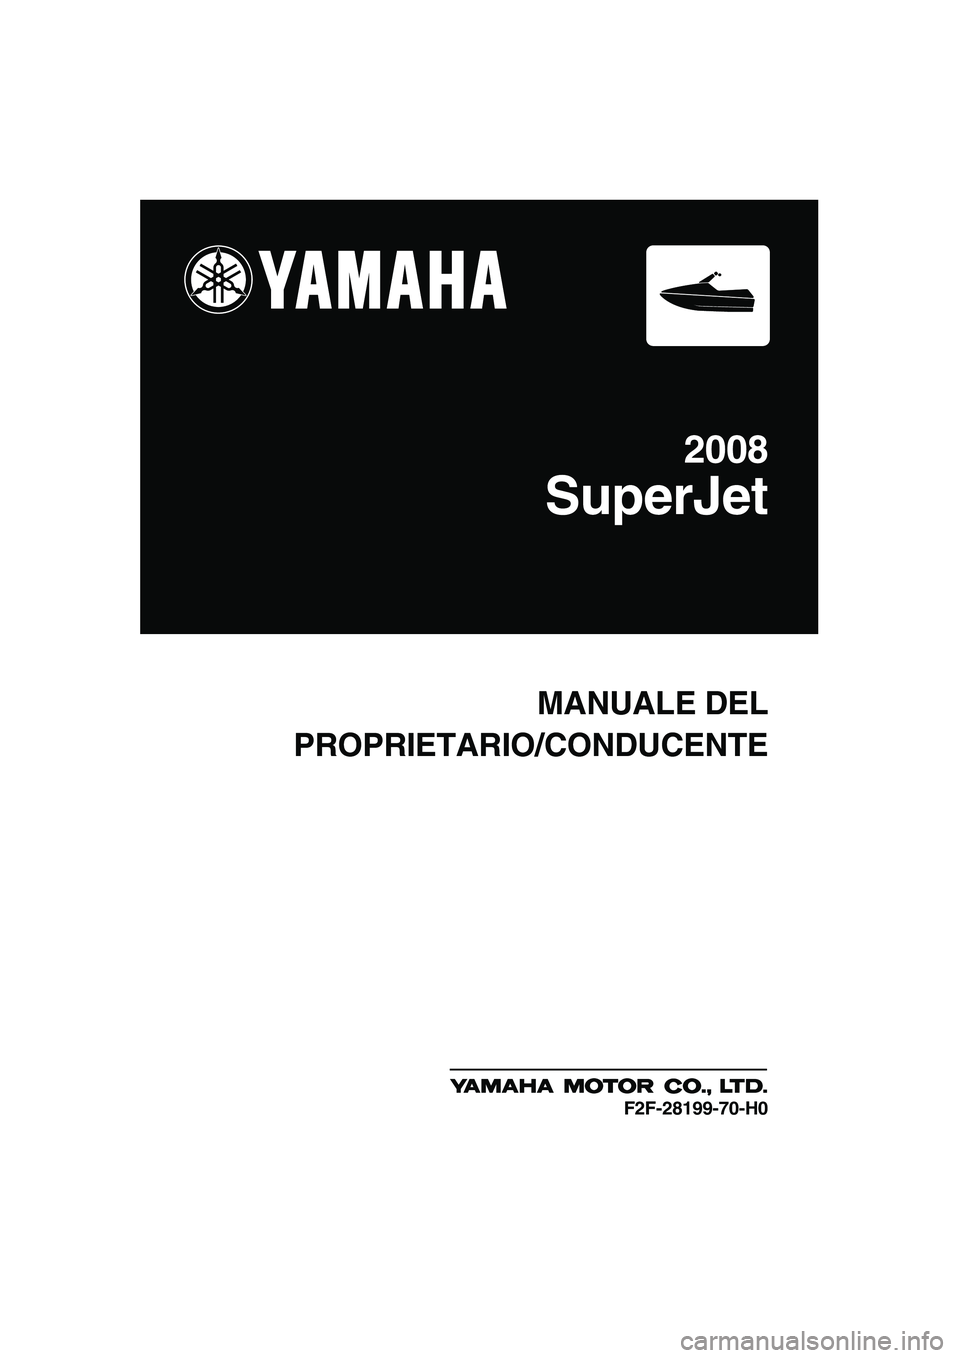 YAMAHA SUPERJET 2008  Manuale duso (in Italian) MANUALE DEL
PROPRIETARIO/CONDUCENTE
2008
SuperJet
F2F-28199-70-H0
UF2F70H0.book  Page 1  Tuesday, April 17, 2007  9:22 AM 